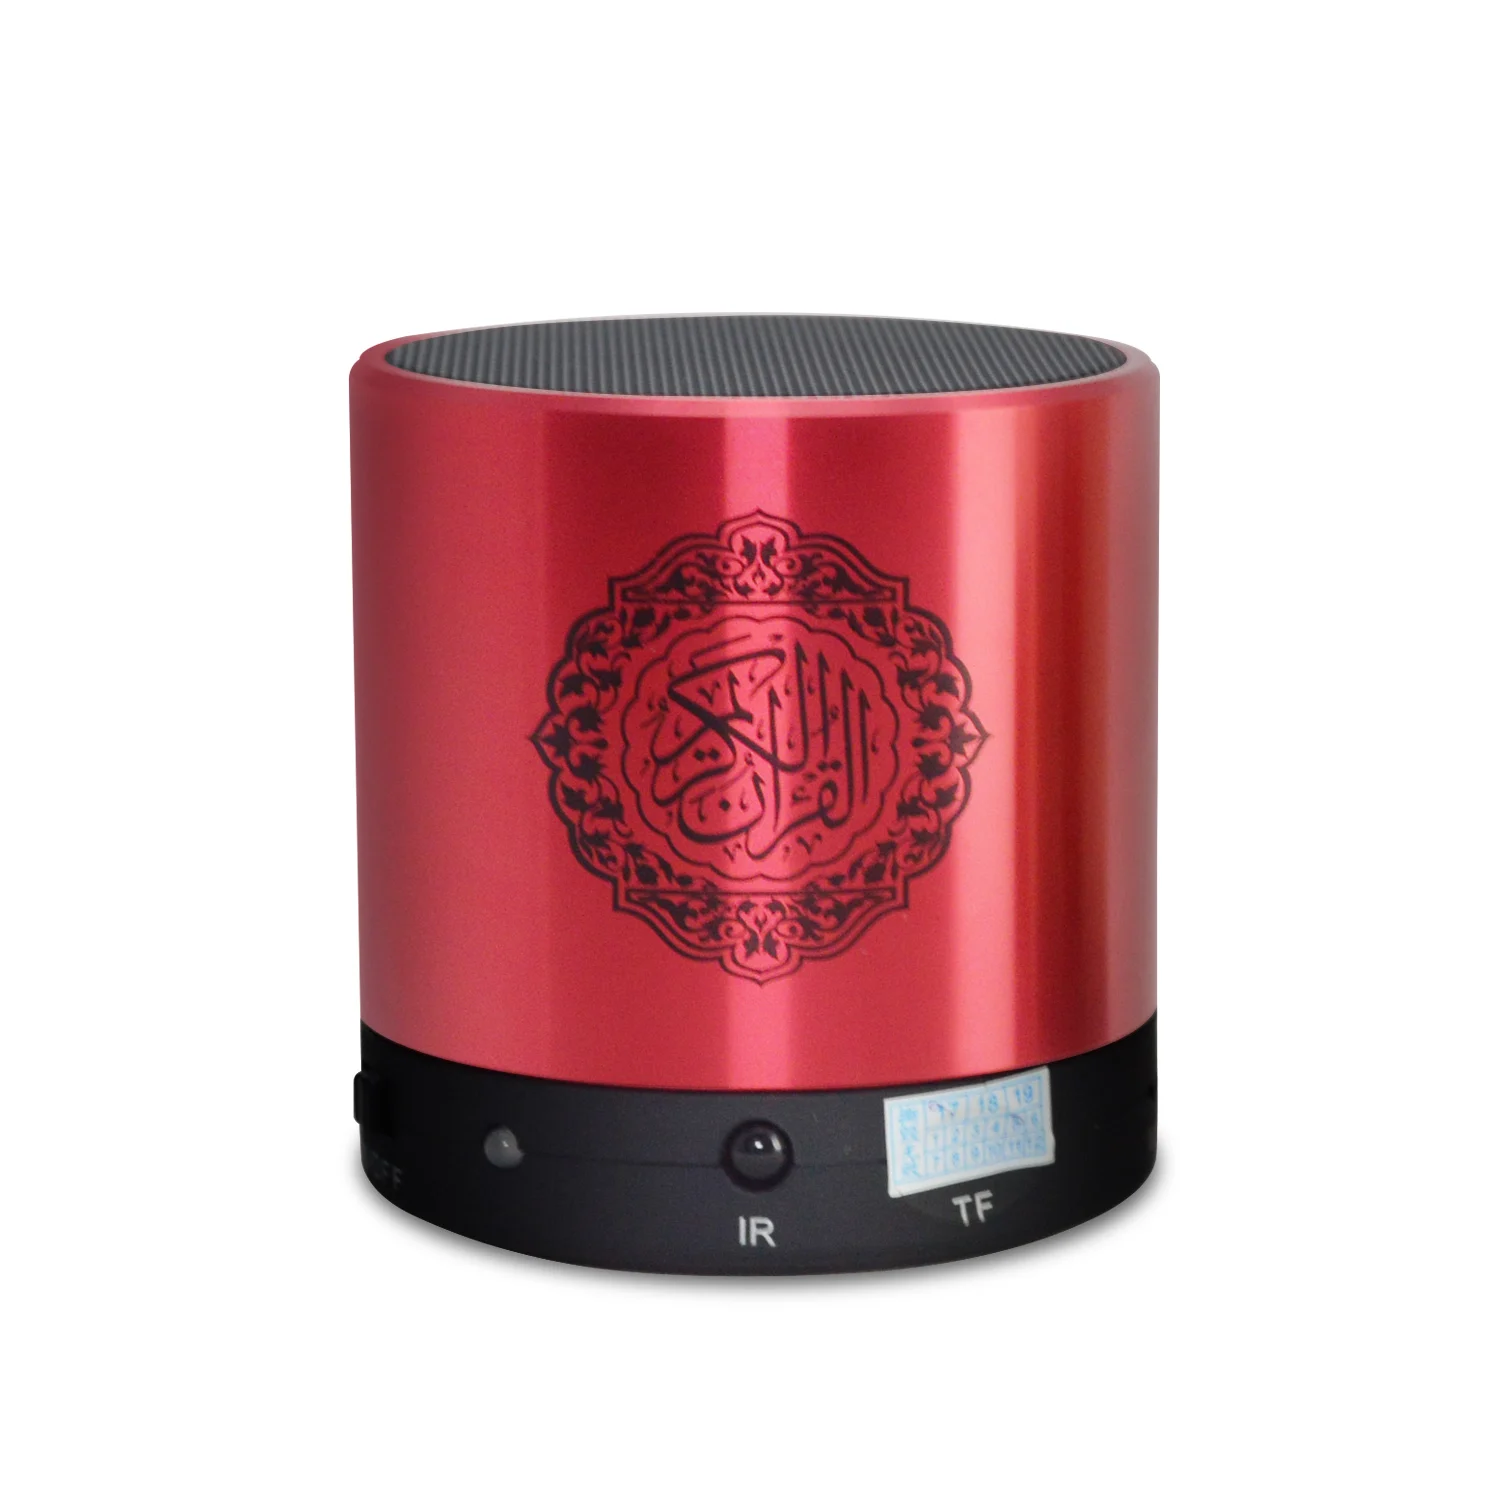 

Equantu 8GB portable al digital islamic holy gift player mp3 download quran sudais mini quran speaker with remote, Red/black/gold/silver